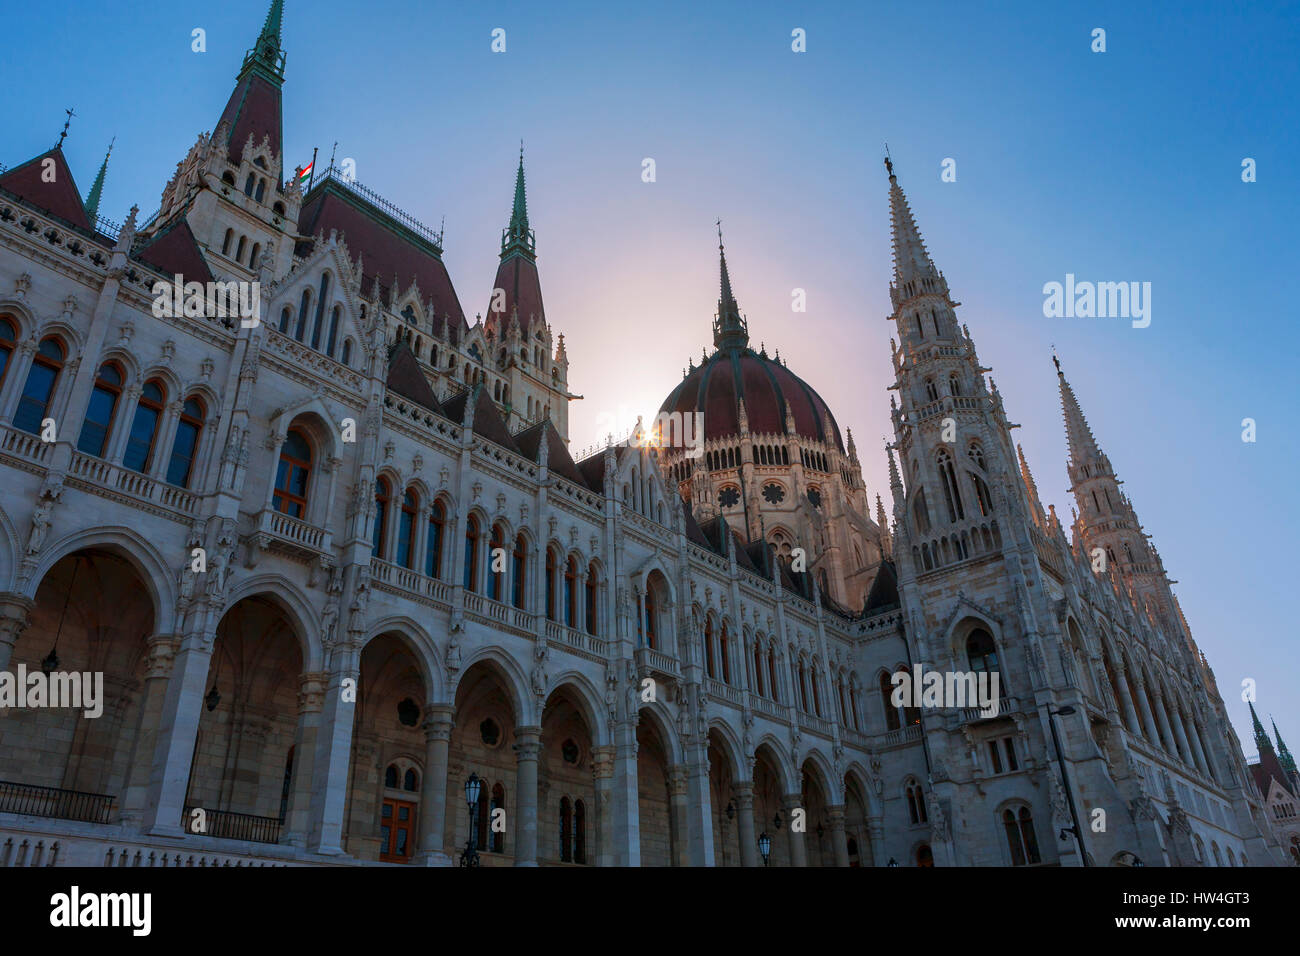 Parlamento ungherese edificio (Országház) Lipótváros, Budapest, Ungheria Foto Stock